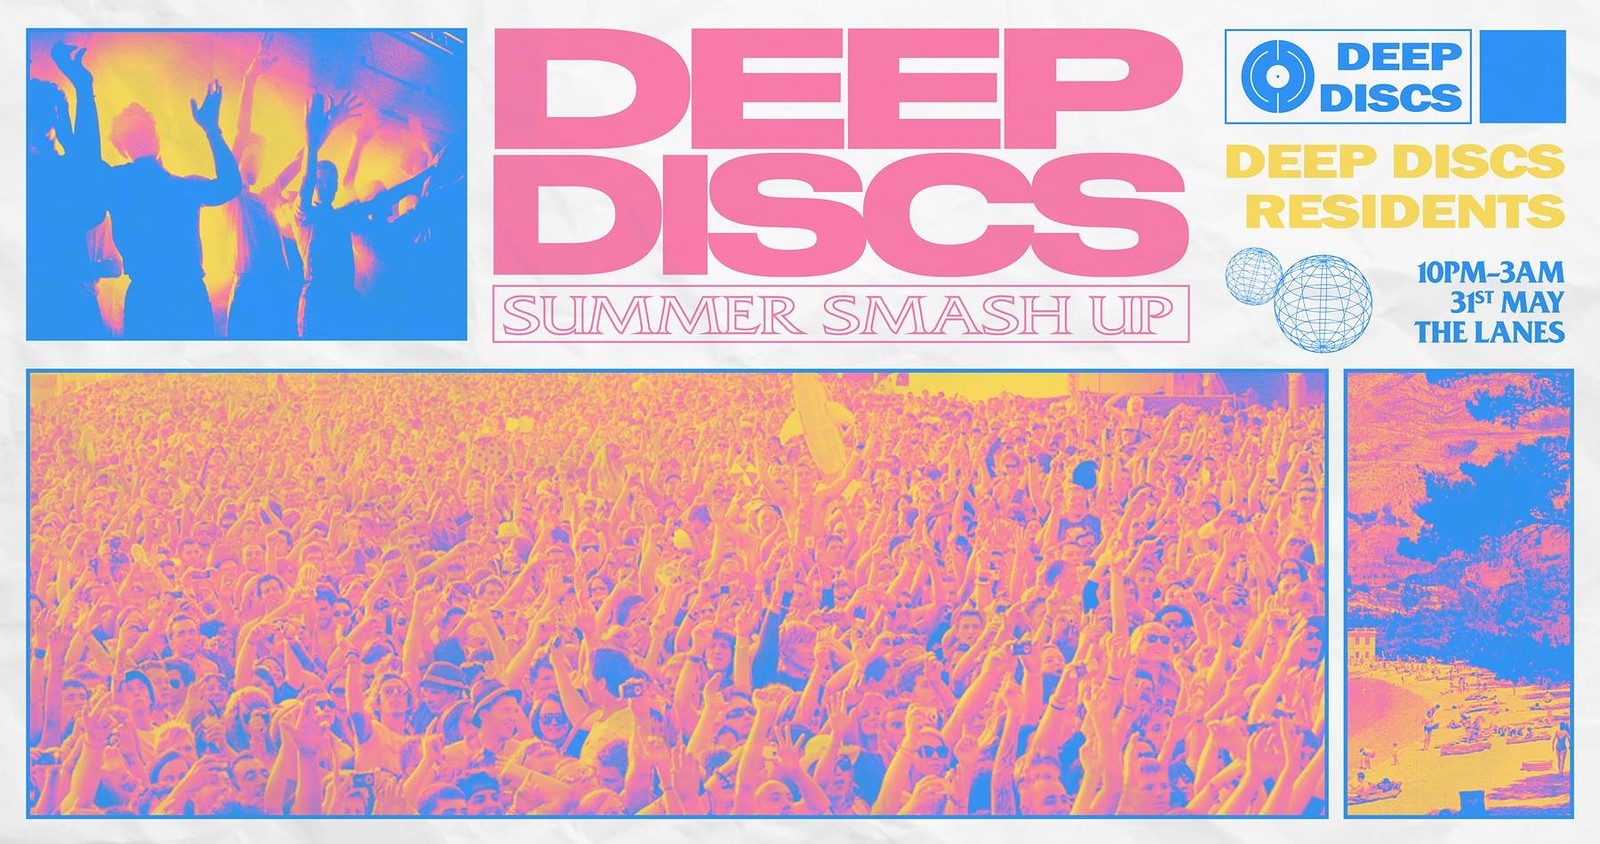 Deep Discs Summer Smash Up at The Lanes